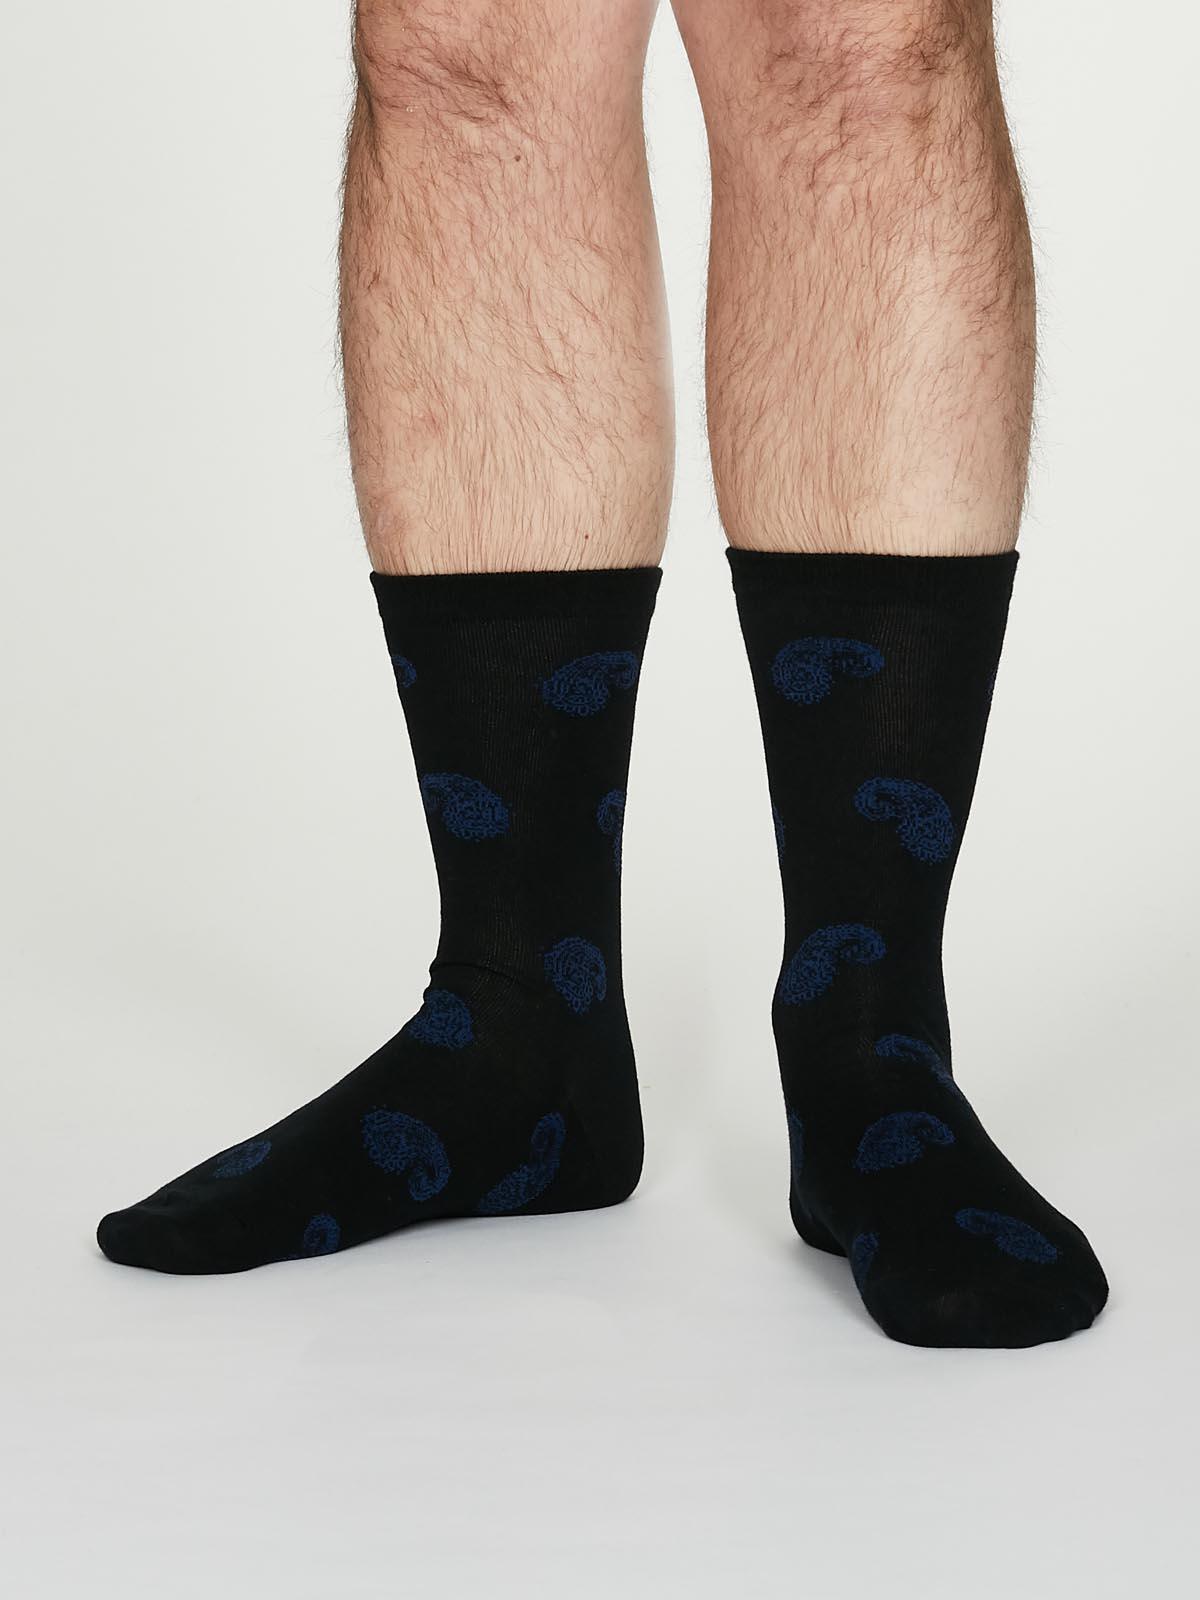 Homer Socks - Black - Thought Clothing UK